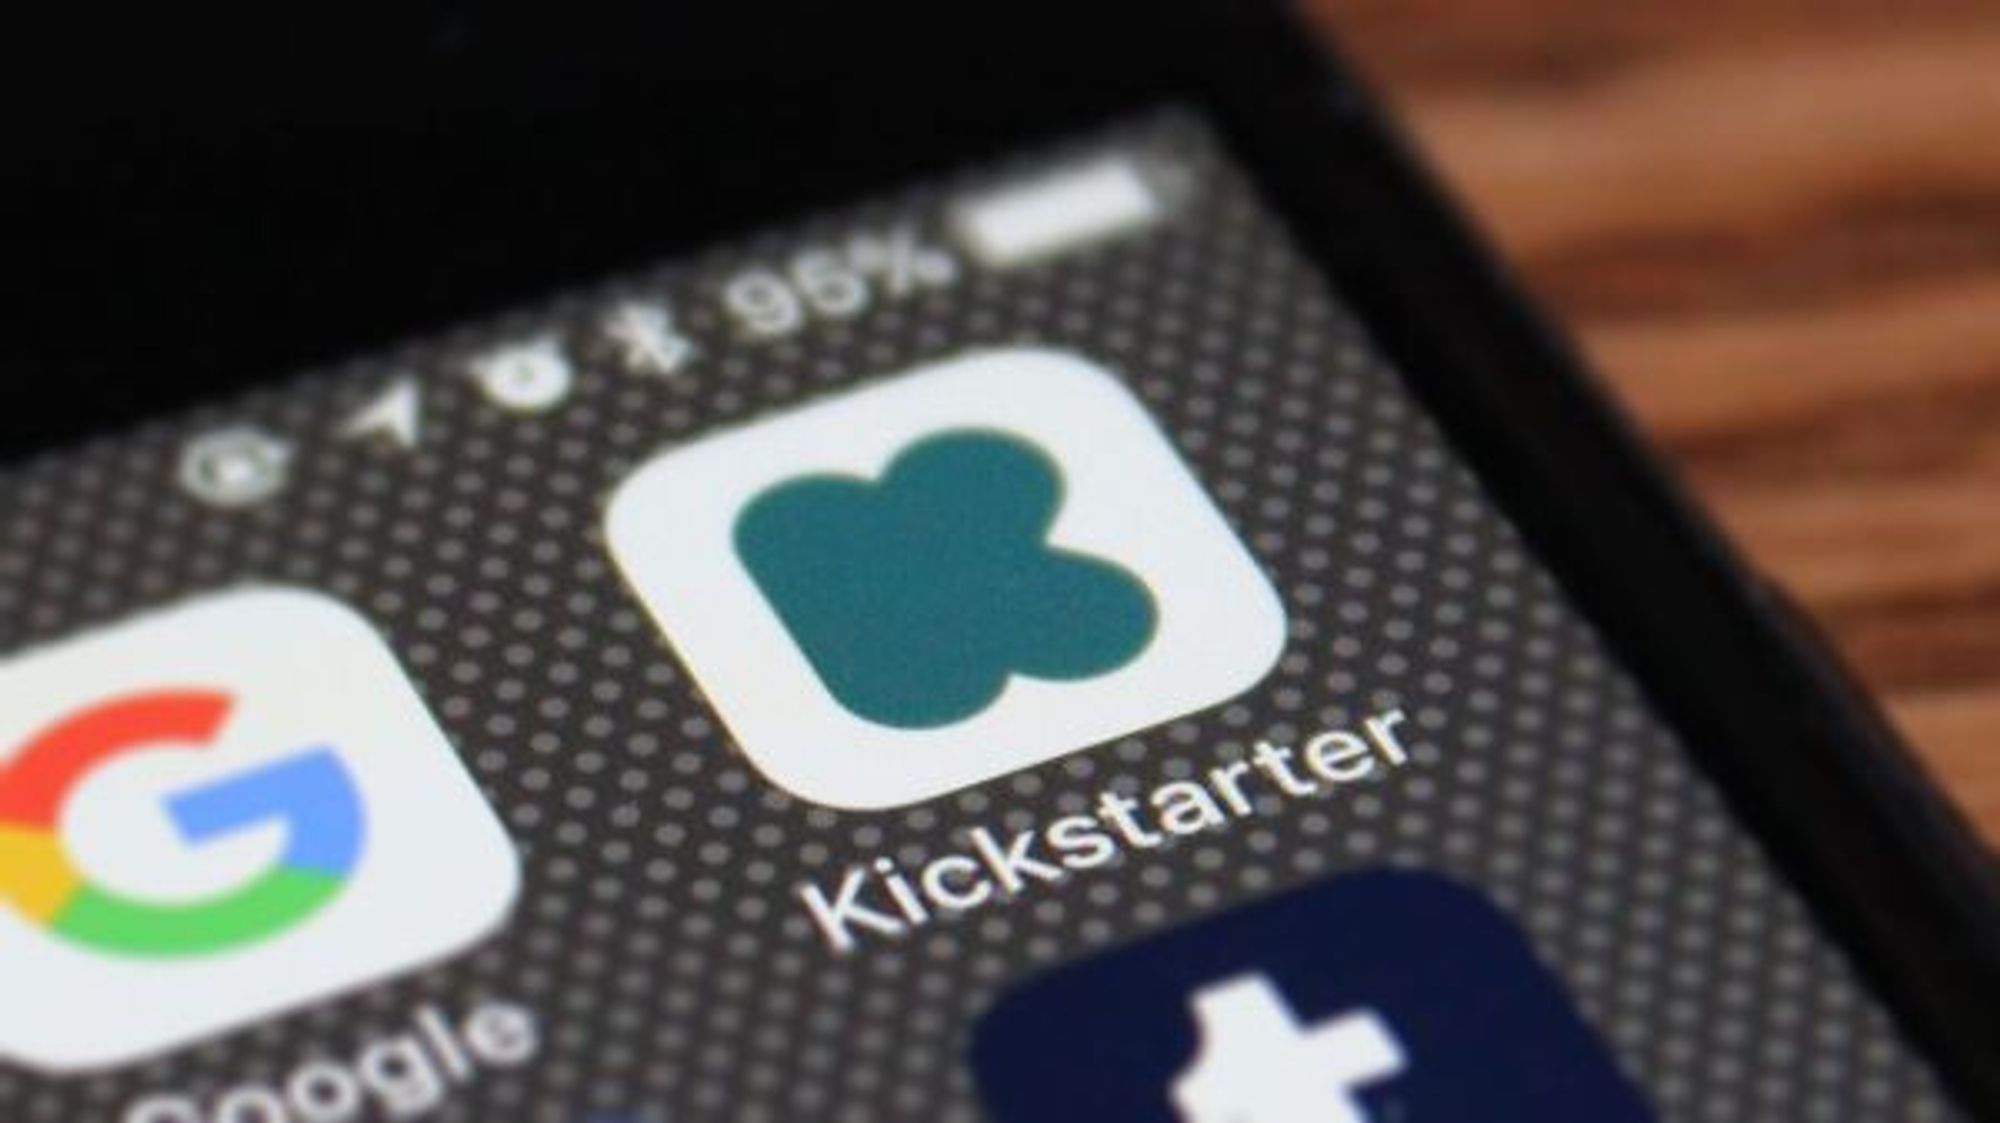 Kickstarter plans to move its crowdfunding platform to the blockchain